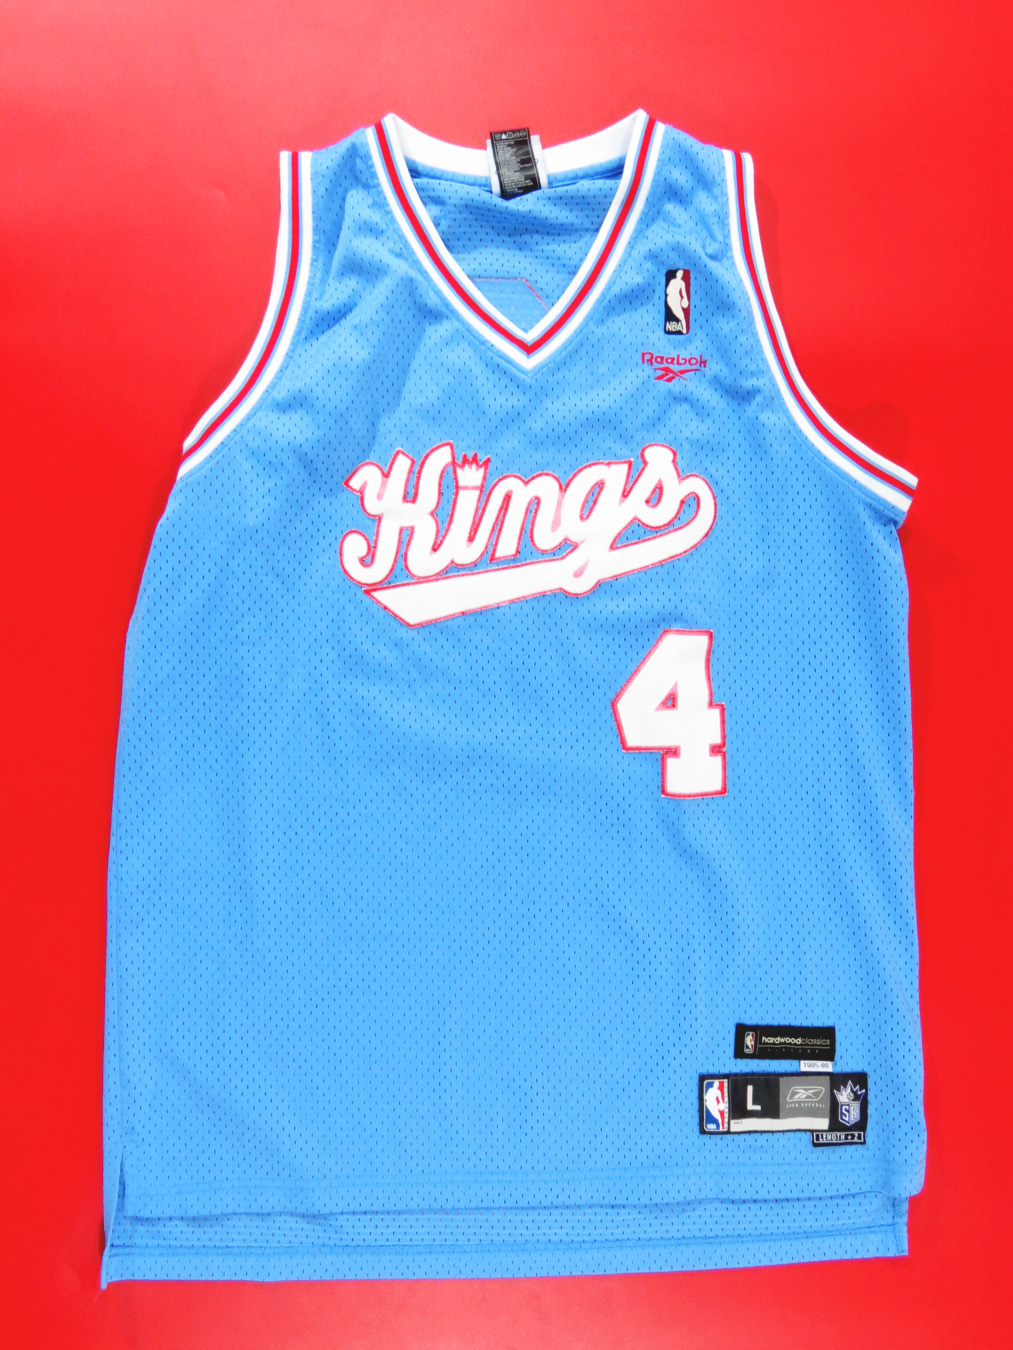 Chris Webber 1998-2005 Sacramento Kings Reebok NBA replica